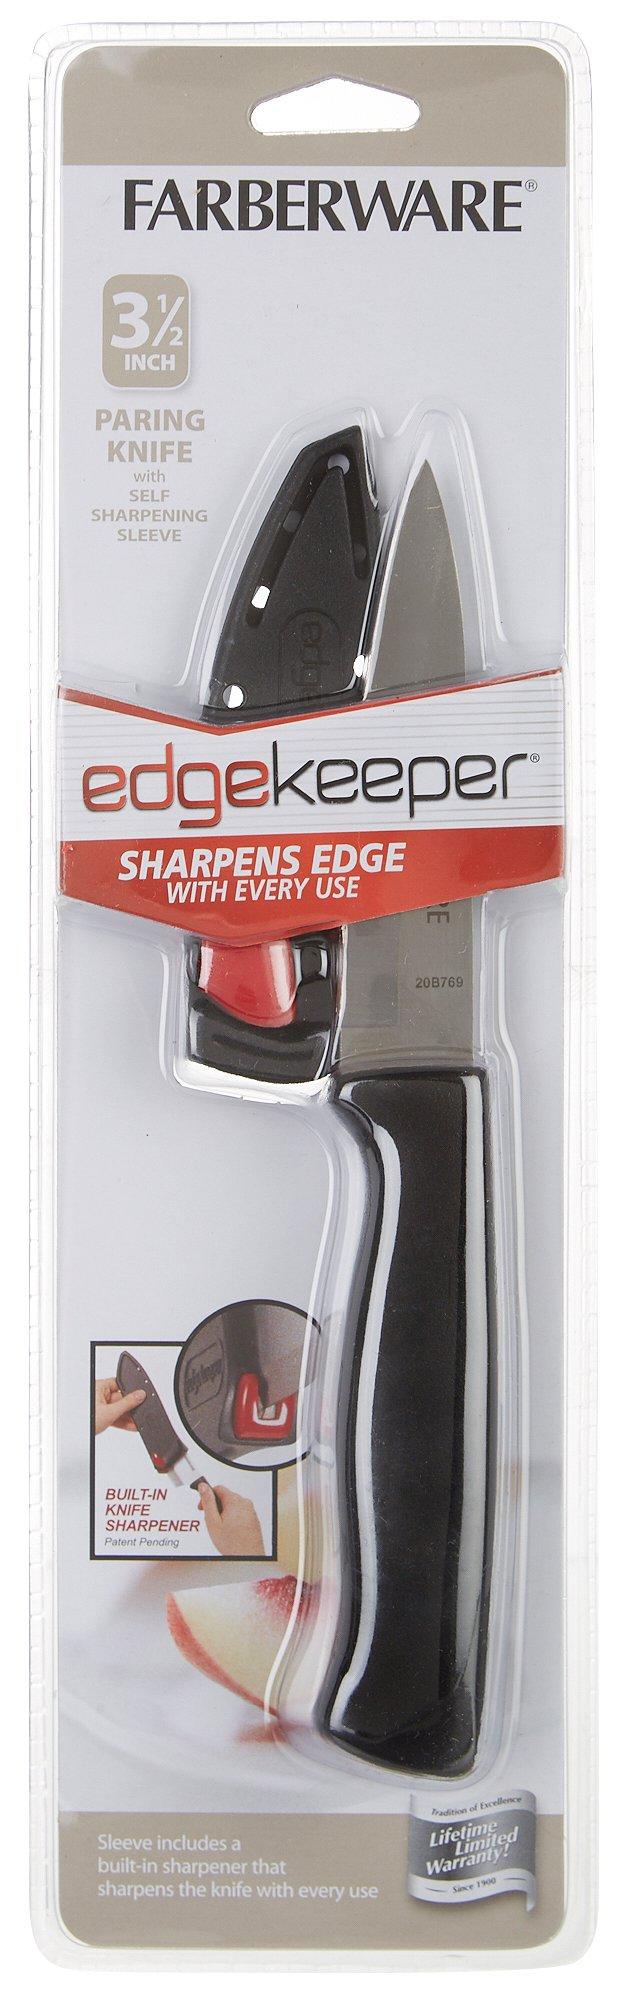 Farberware Edgekeeper 3.5'' Paring Knife